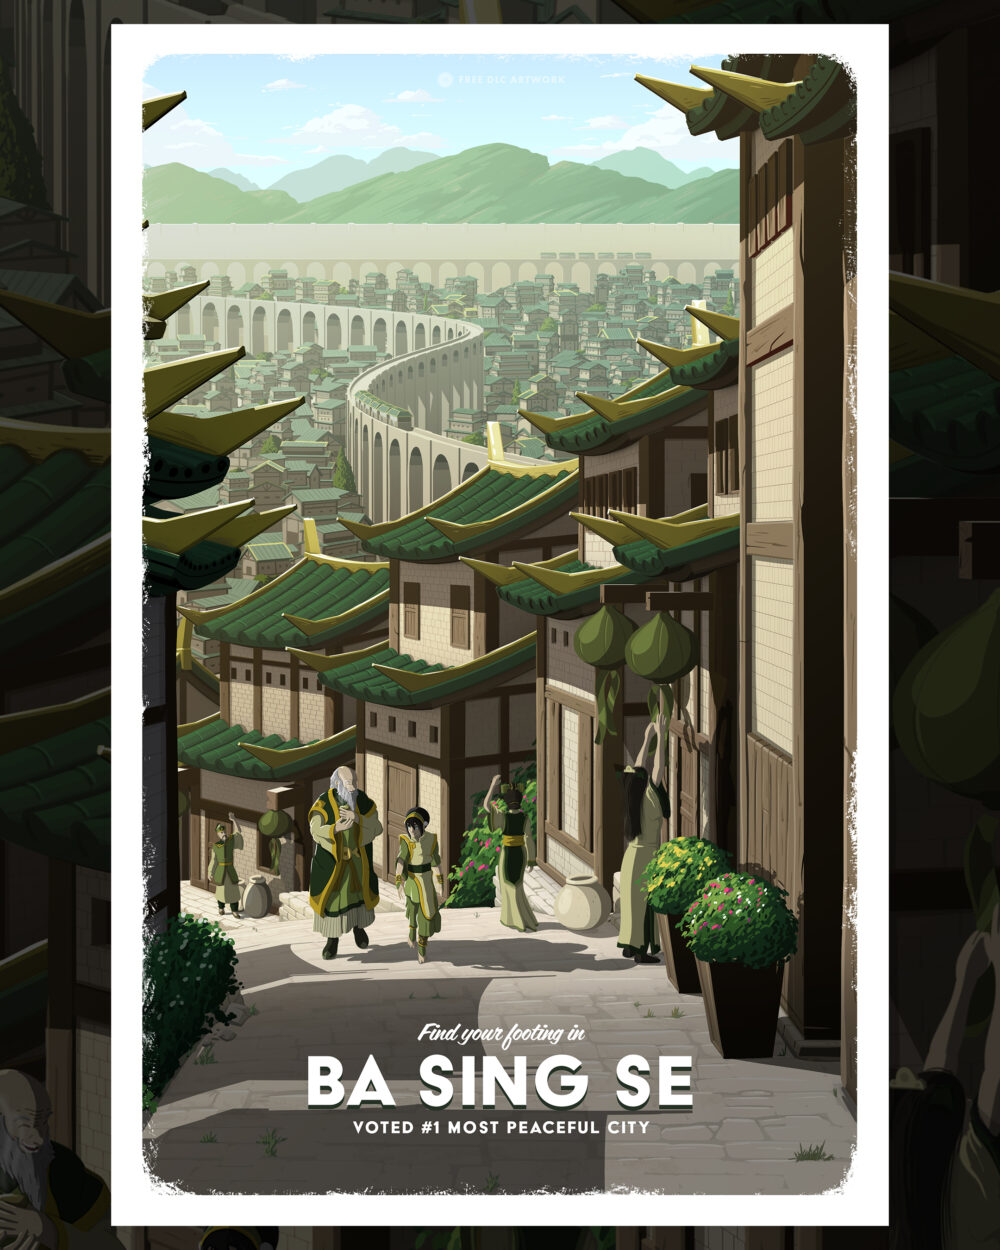 Avatar 4-poster deal: Ba Sing Se